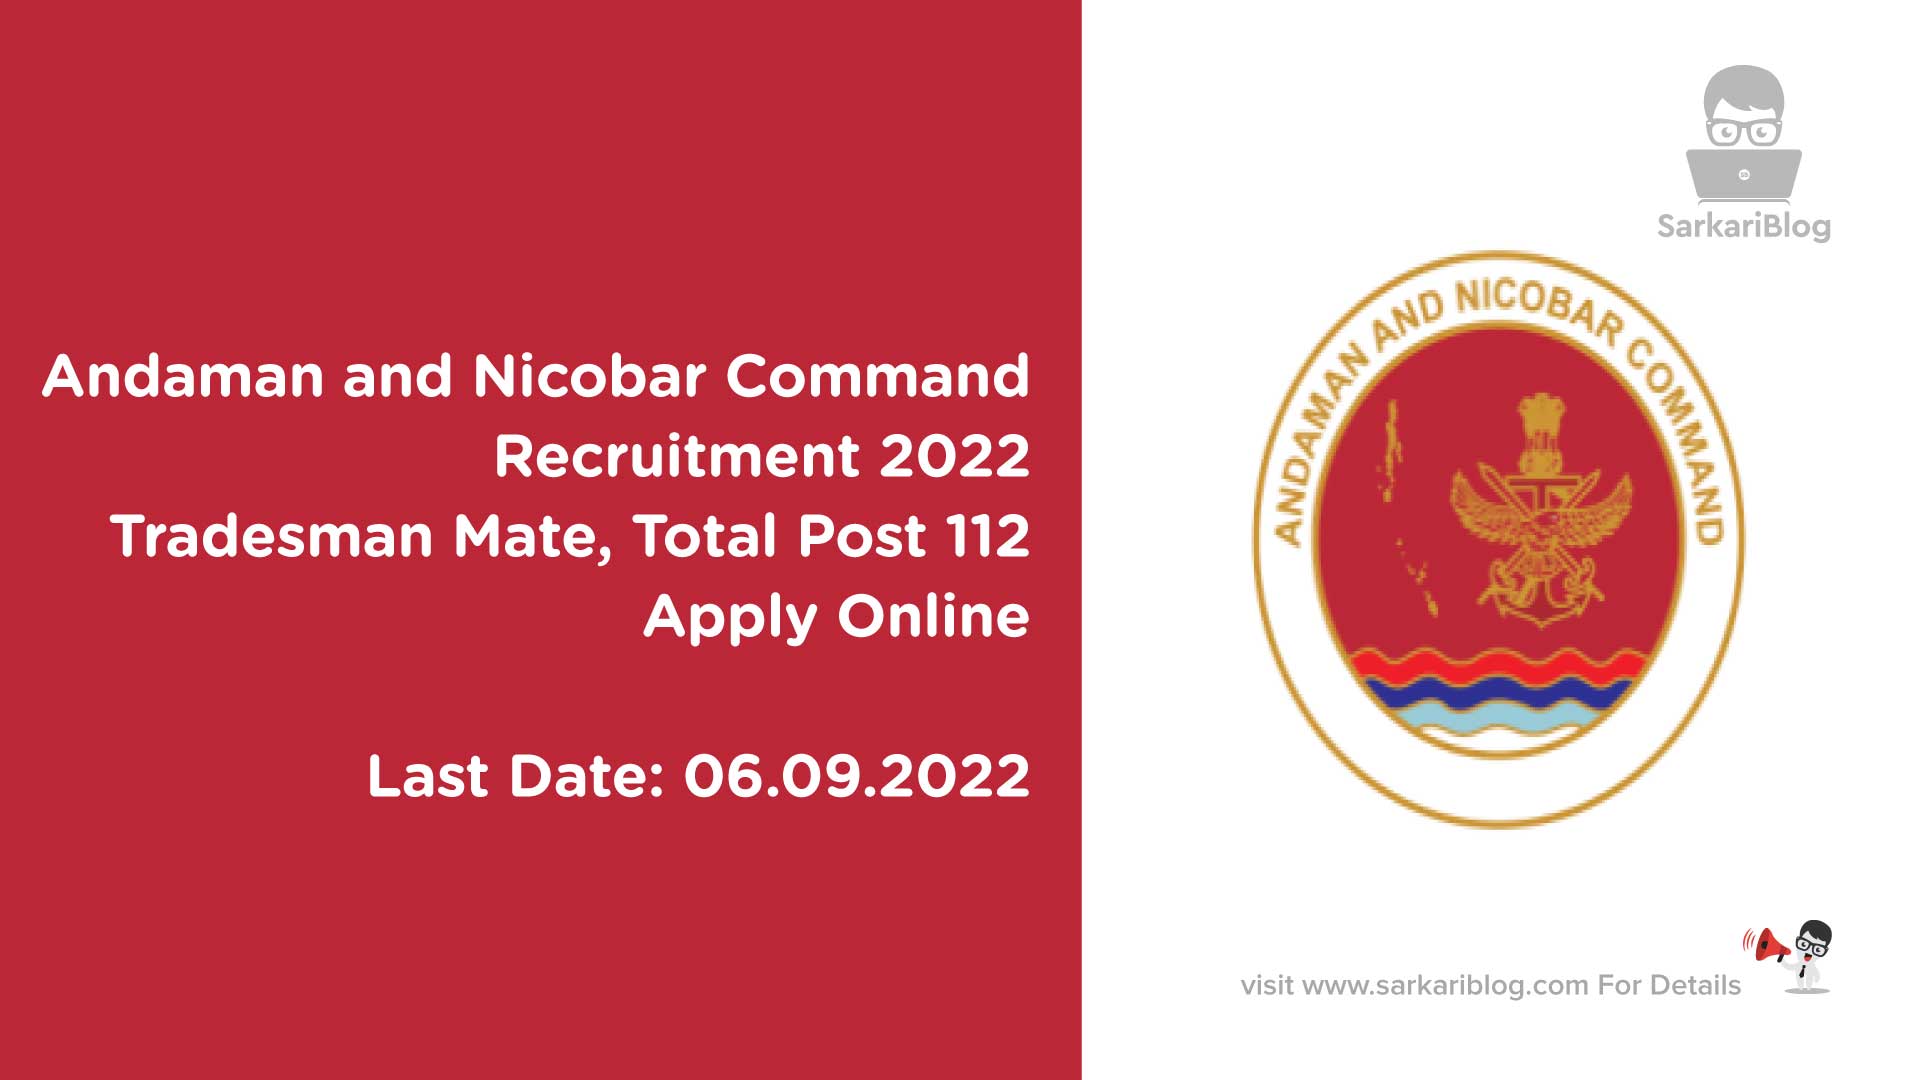 Andaman and Nicobar Command Recruitment 2022